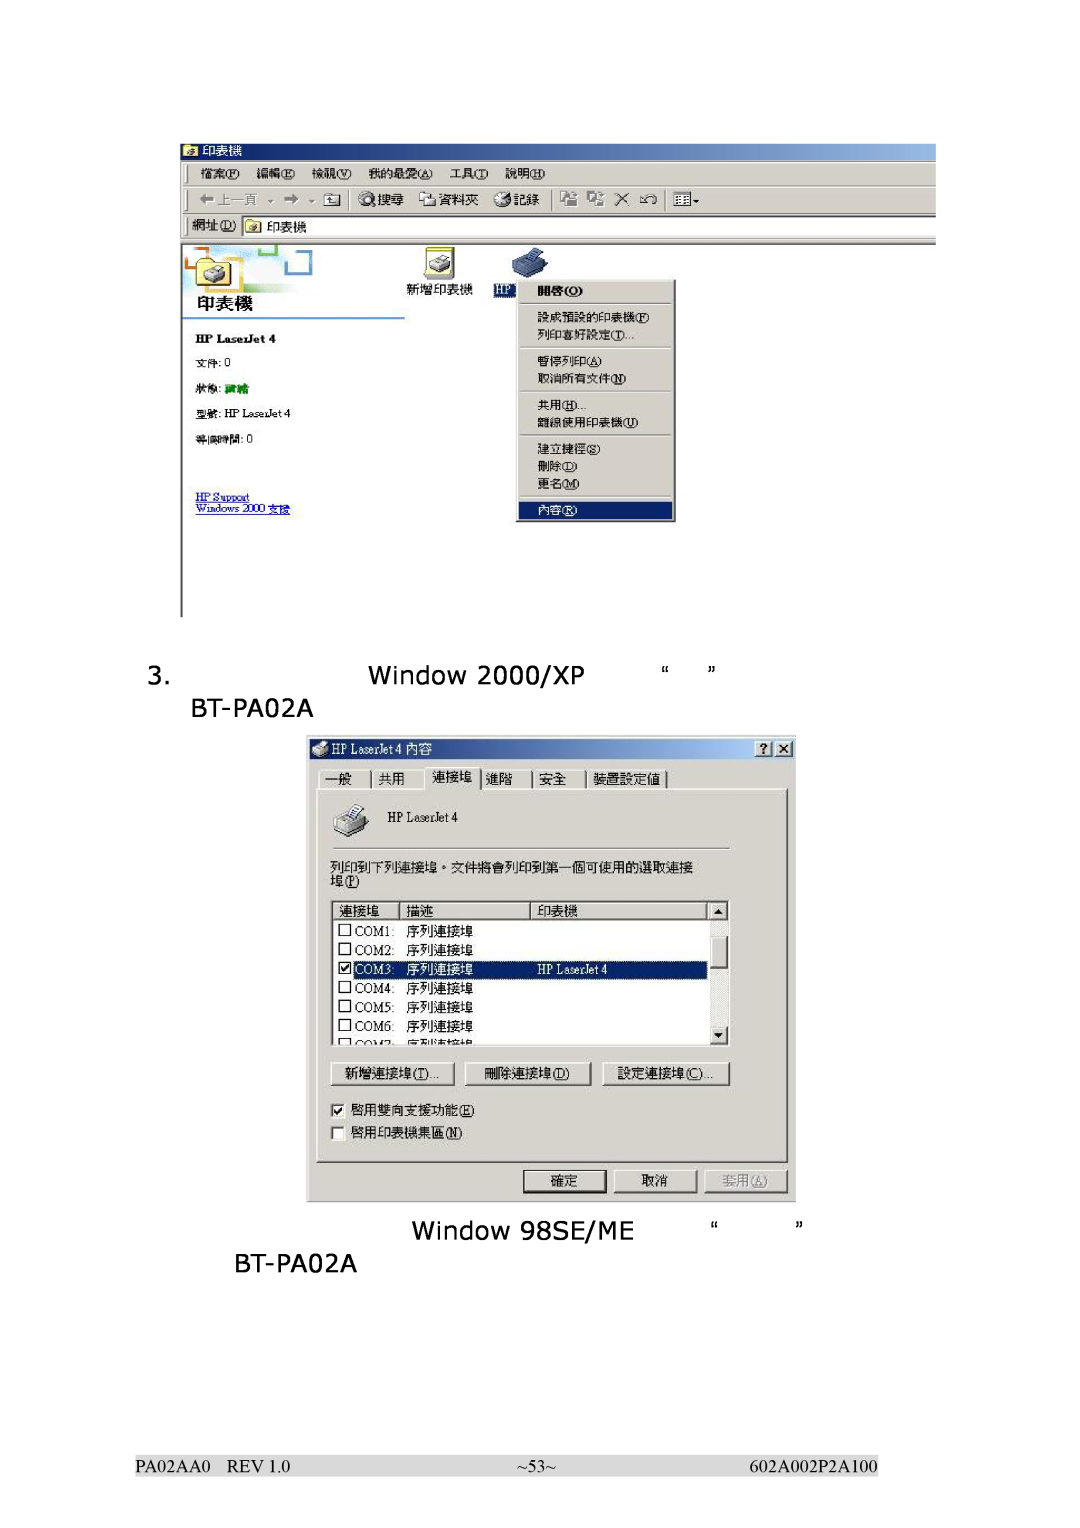 EPoX Computer manual Window 2000/XP“” BT-PA02A Window 98SE/ME“” BT-PA02A, PA02AA0 REV, ~53~, 602A002P2A100 